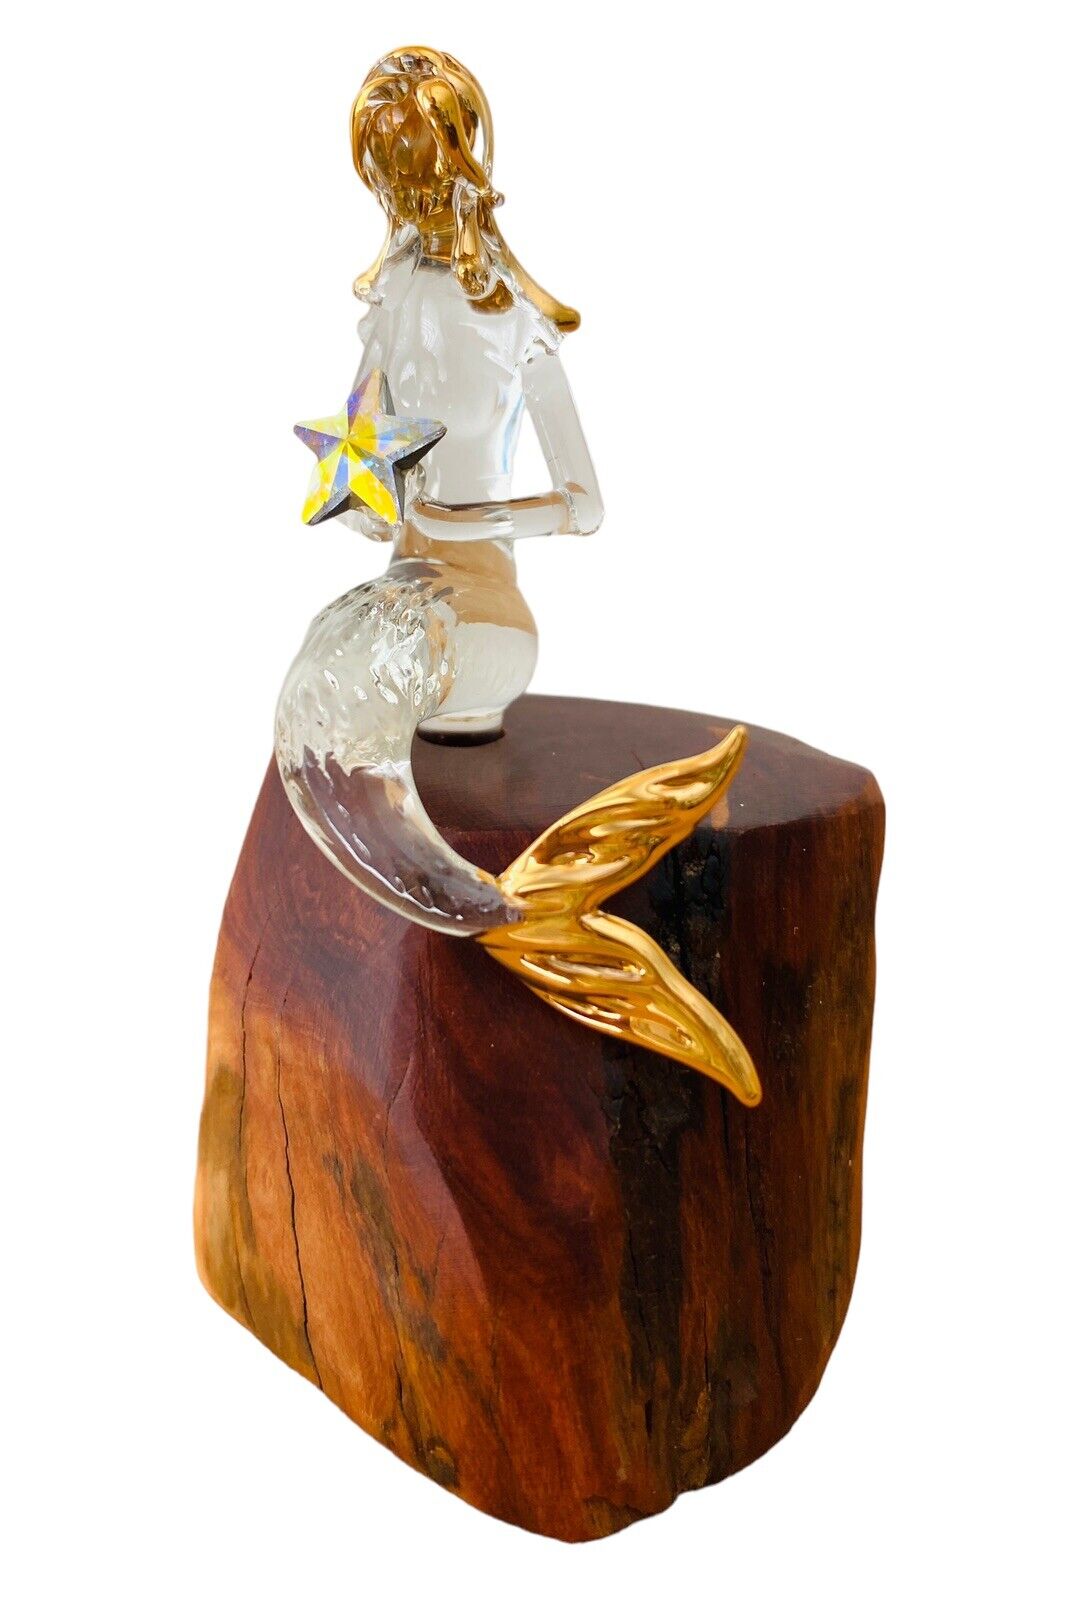 Glass Baron Mermaid 22 KT Gold M2 744G Mermaid Figurine